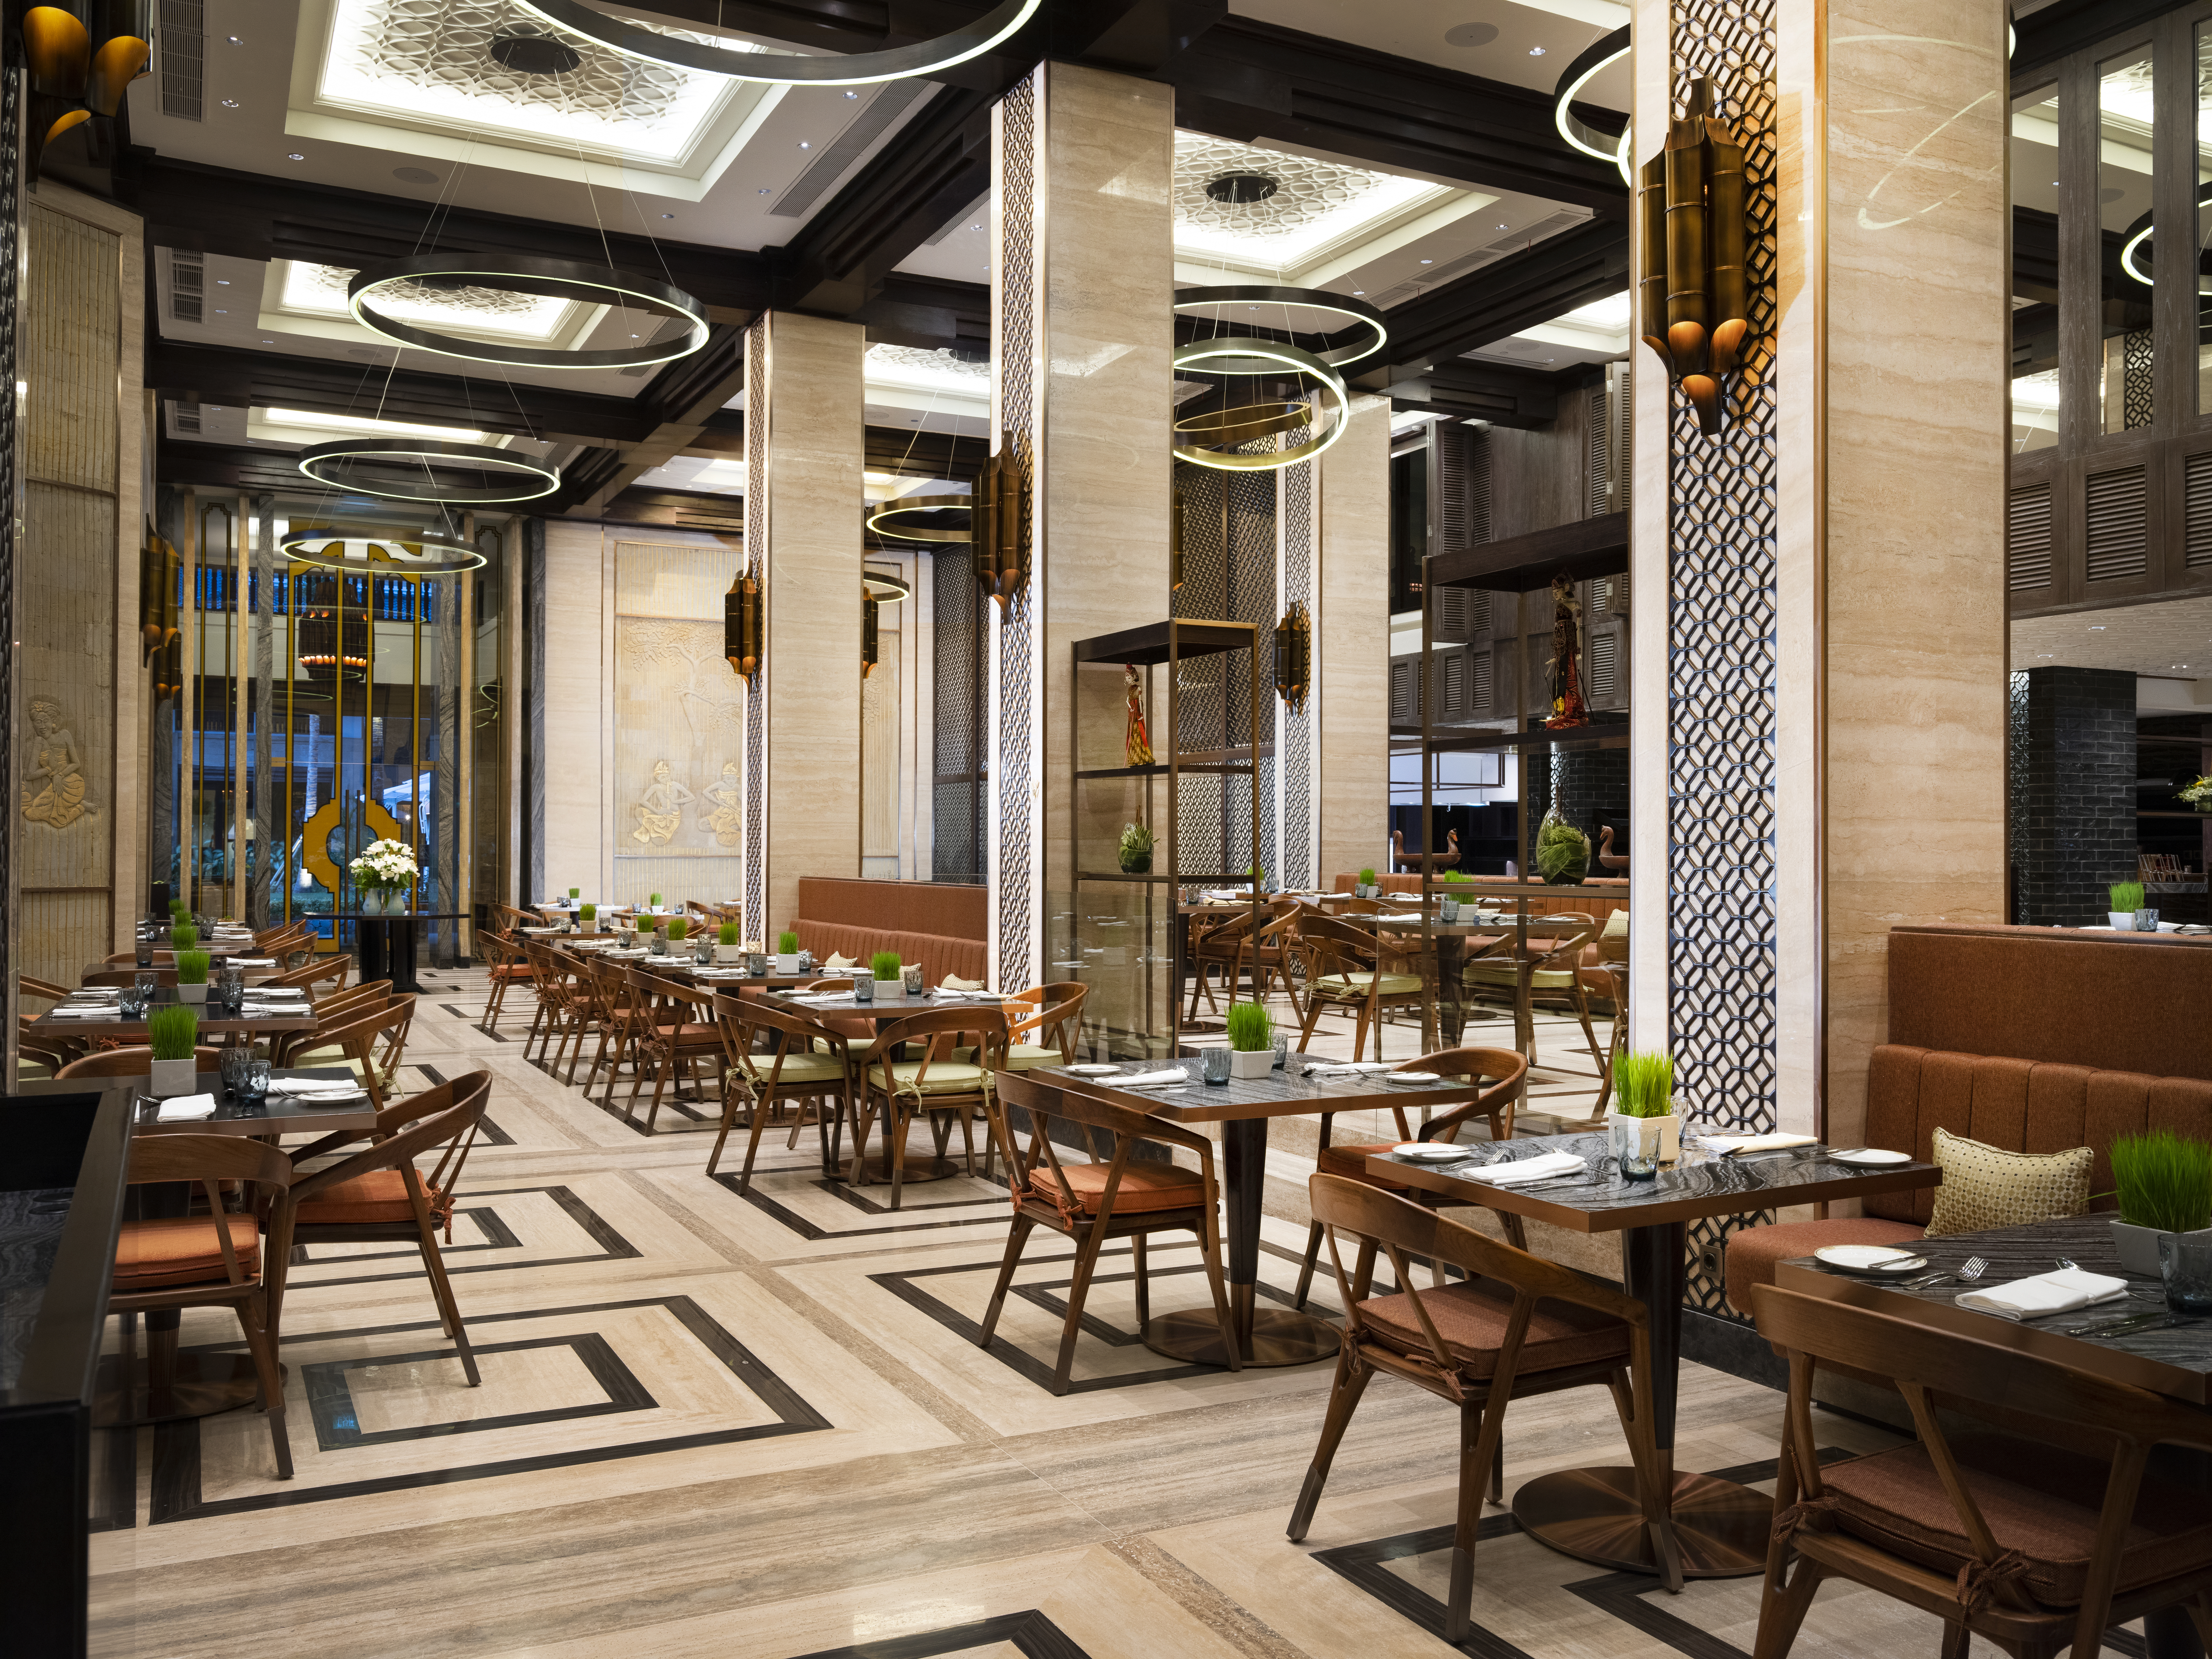 A New Look for InterContinental Bali’s Resorts ‘Taman Gita Restaurant’